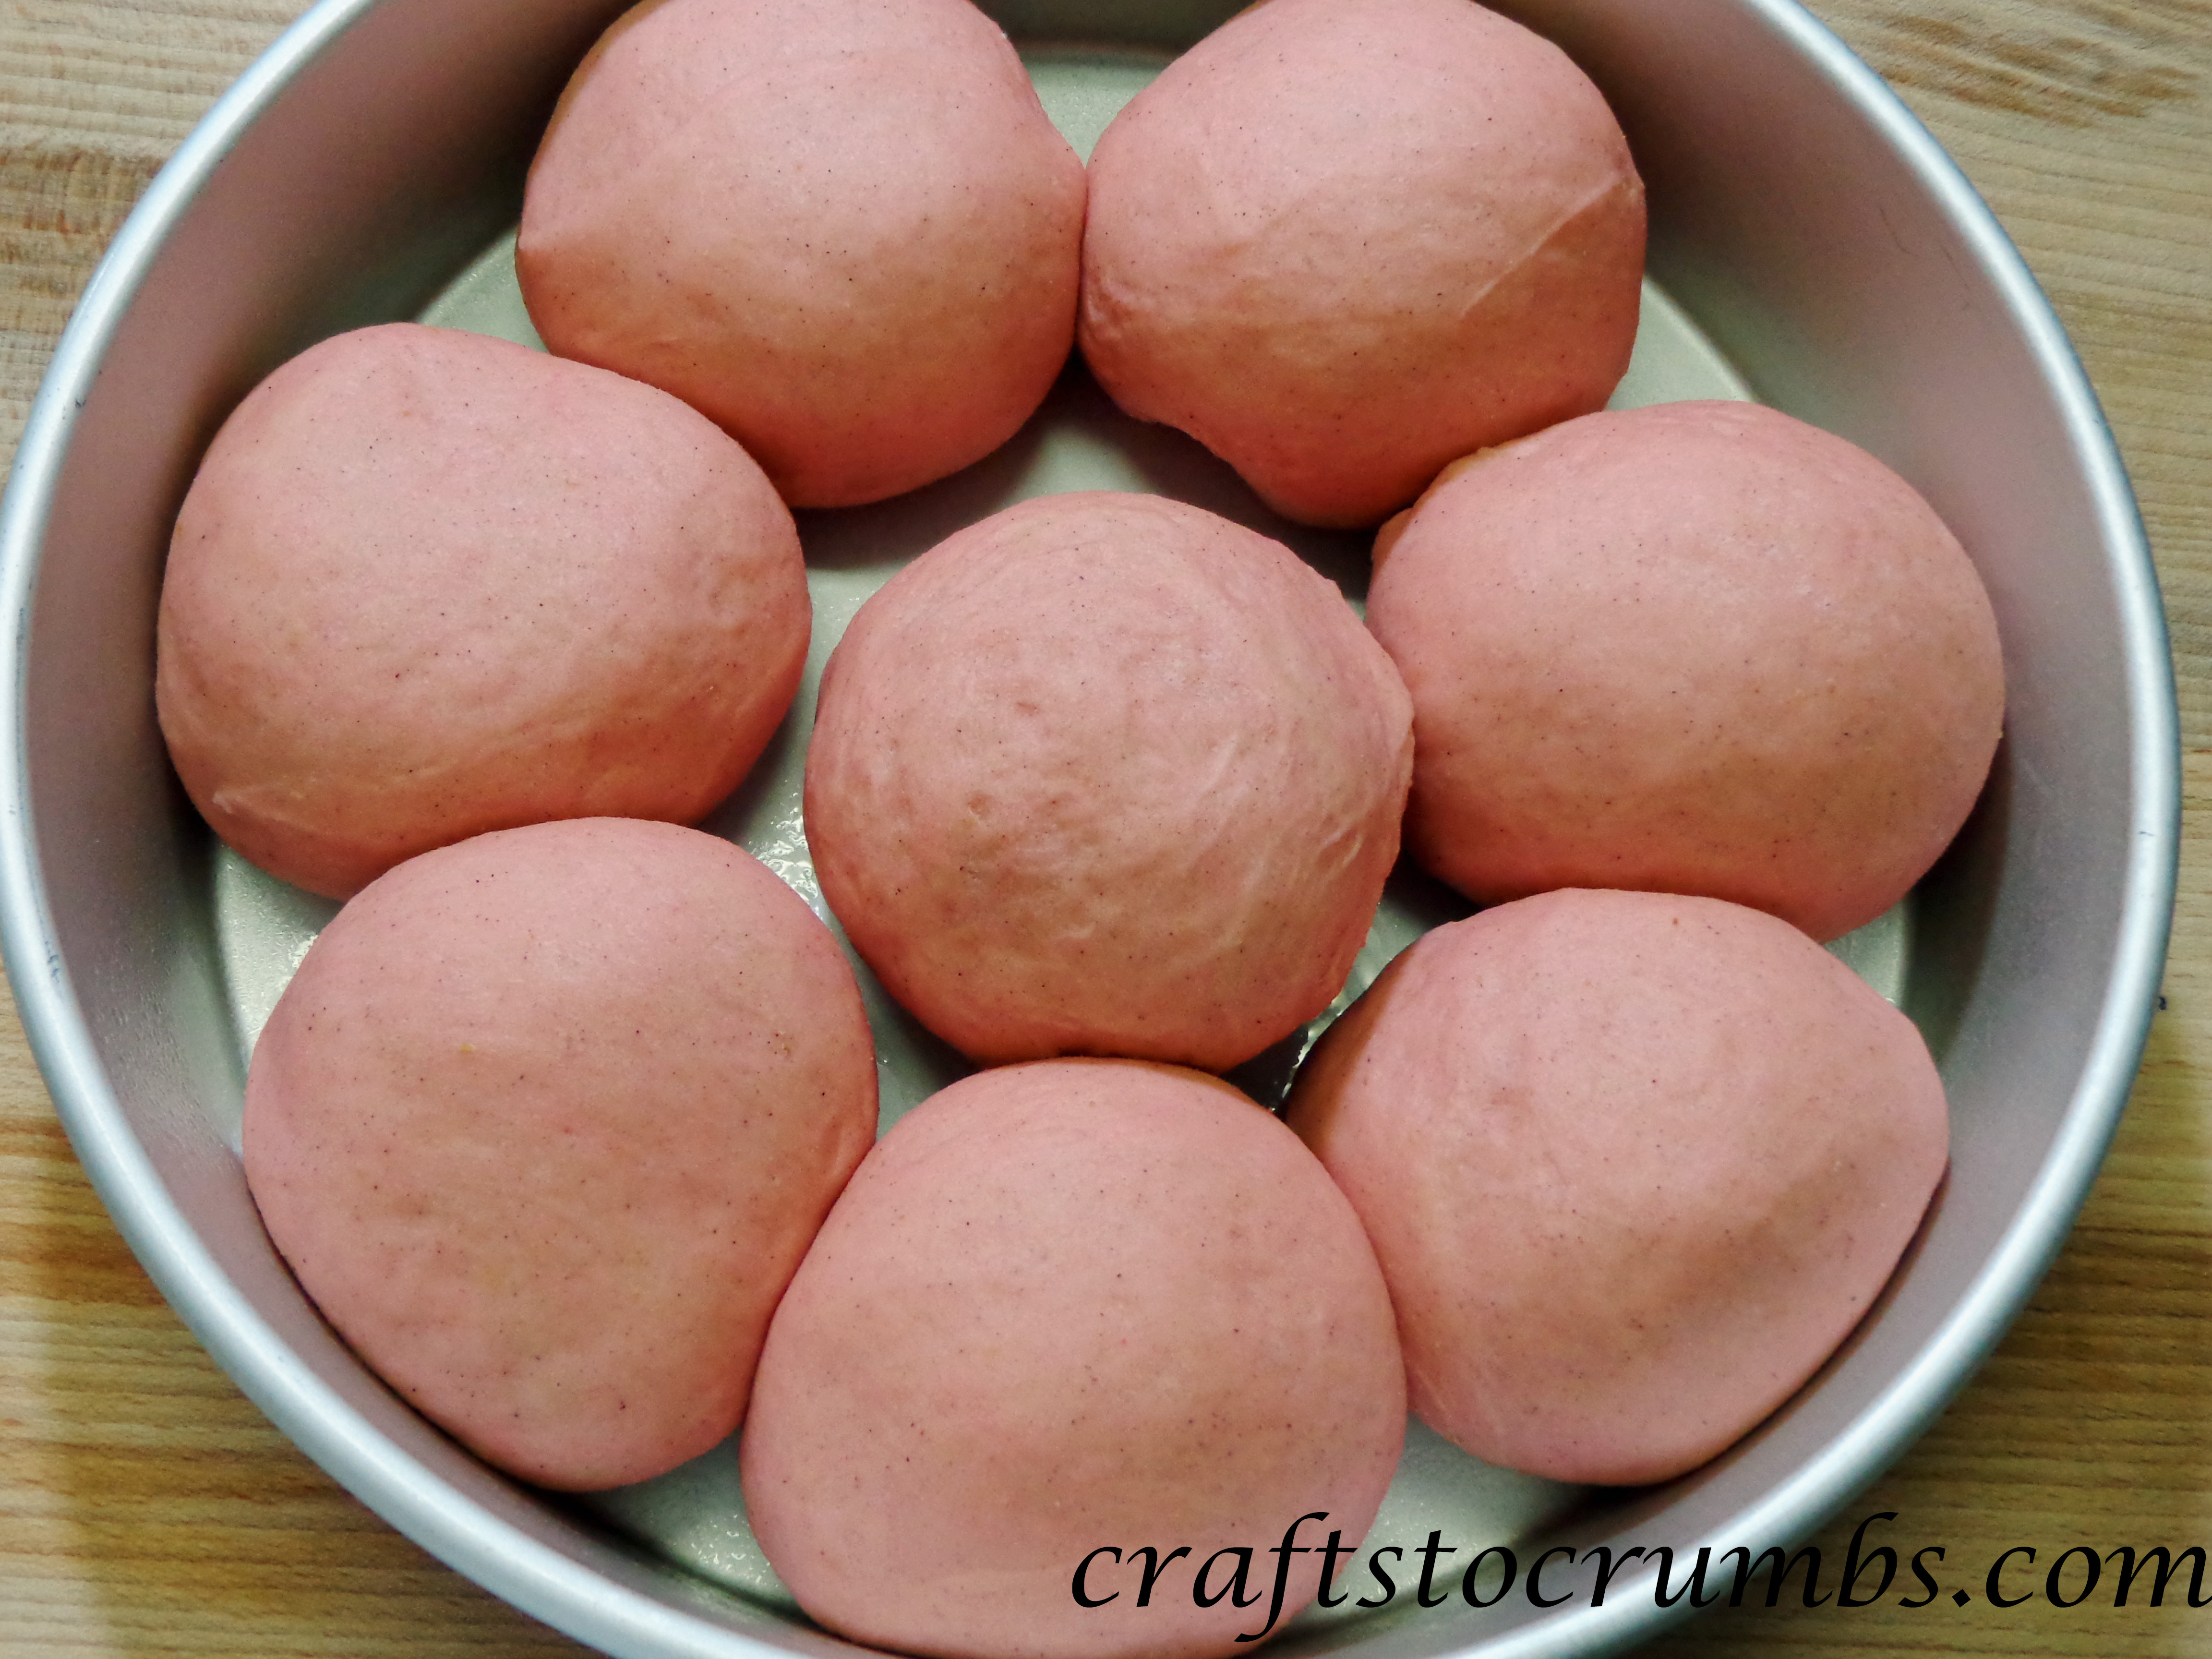 Crafts to Crumbs Guava Rolls